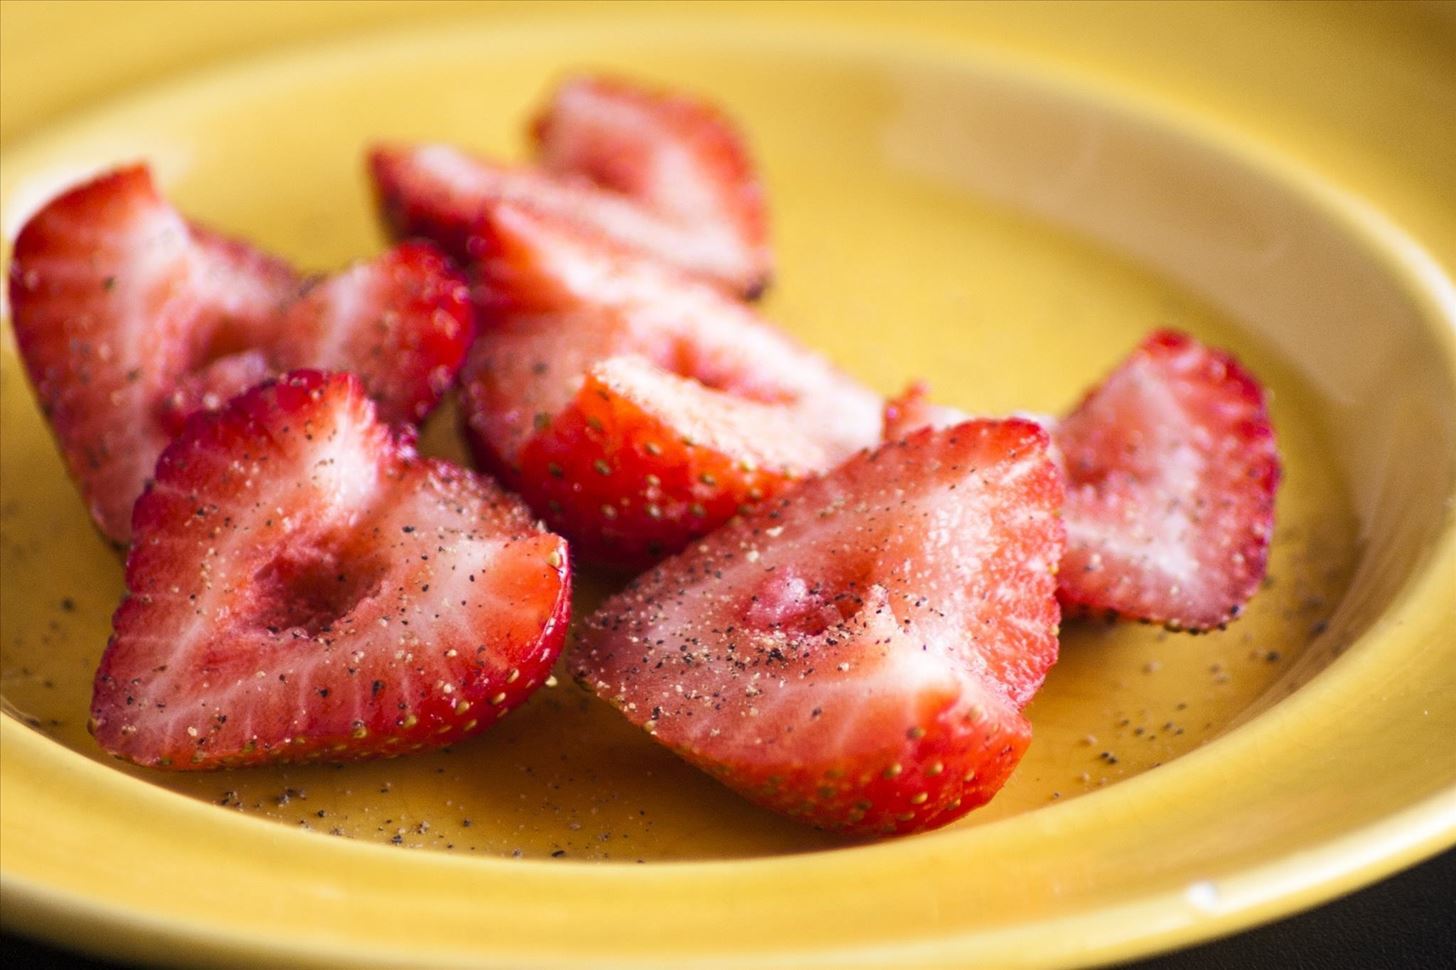 The Secret to Making Strawberries Taste Like Candy